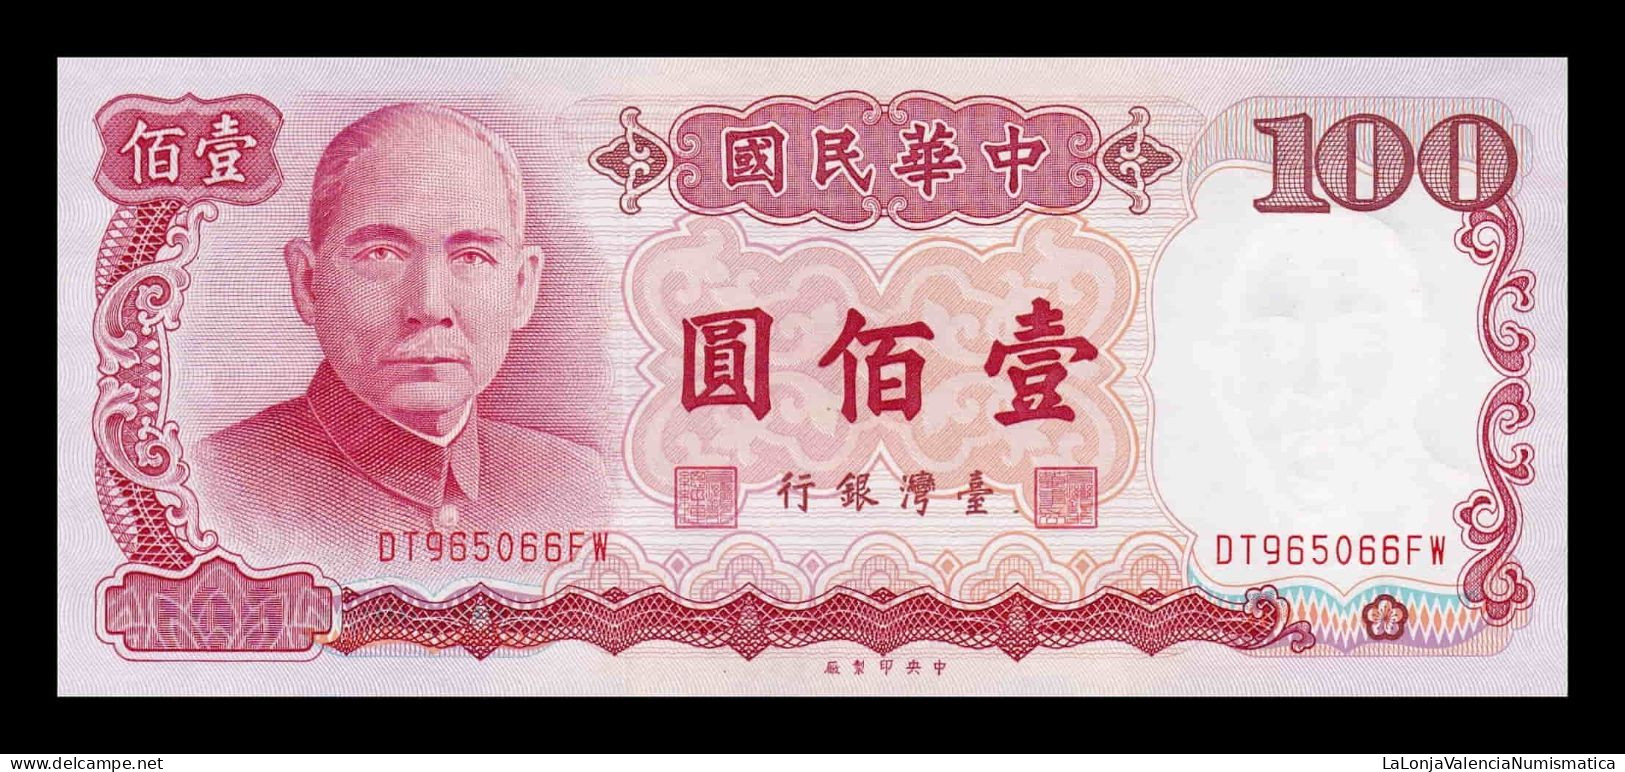 Taiwán 100 Yuan 1987 Pick 1989 Sc Unc - Taiwan